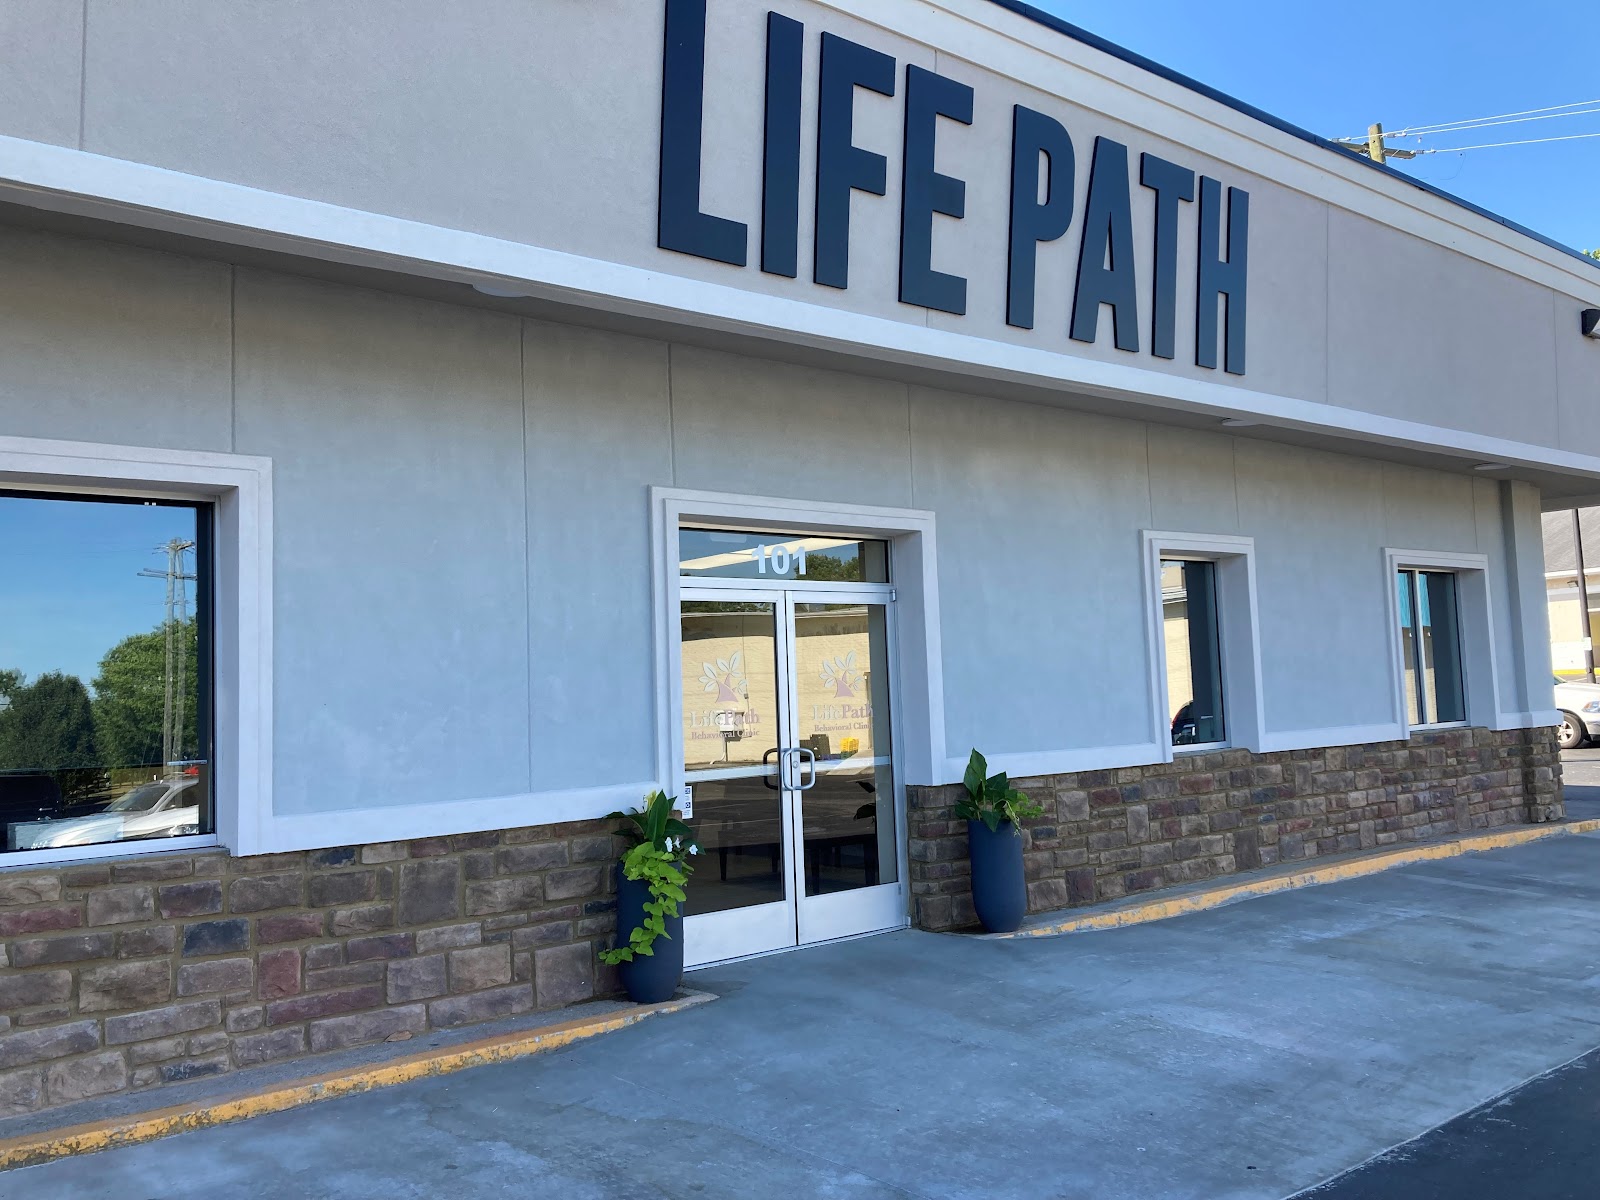 LifePath Behavioral Clinic